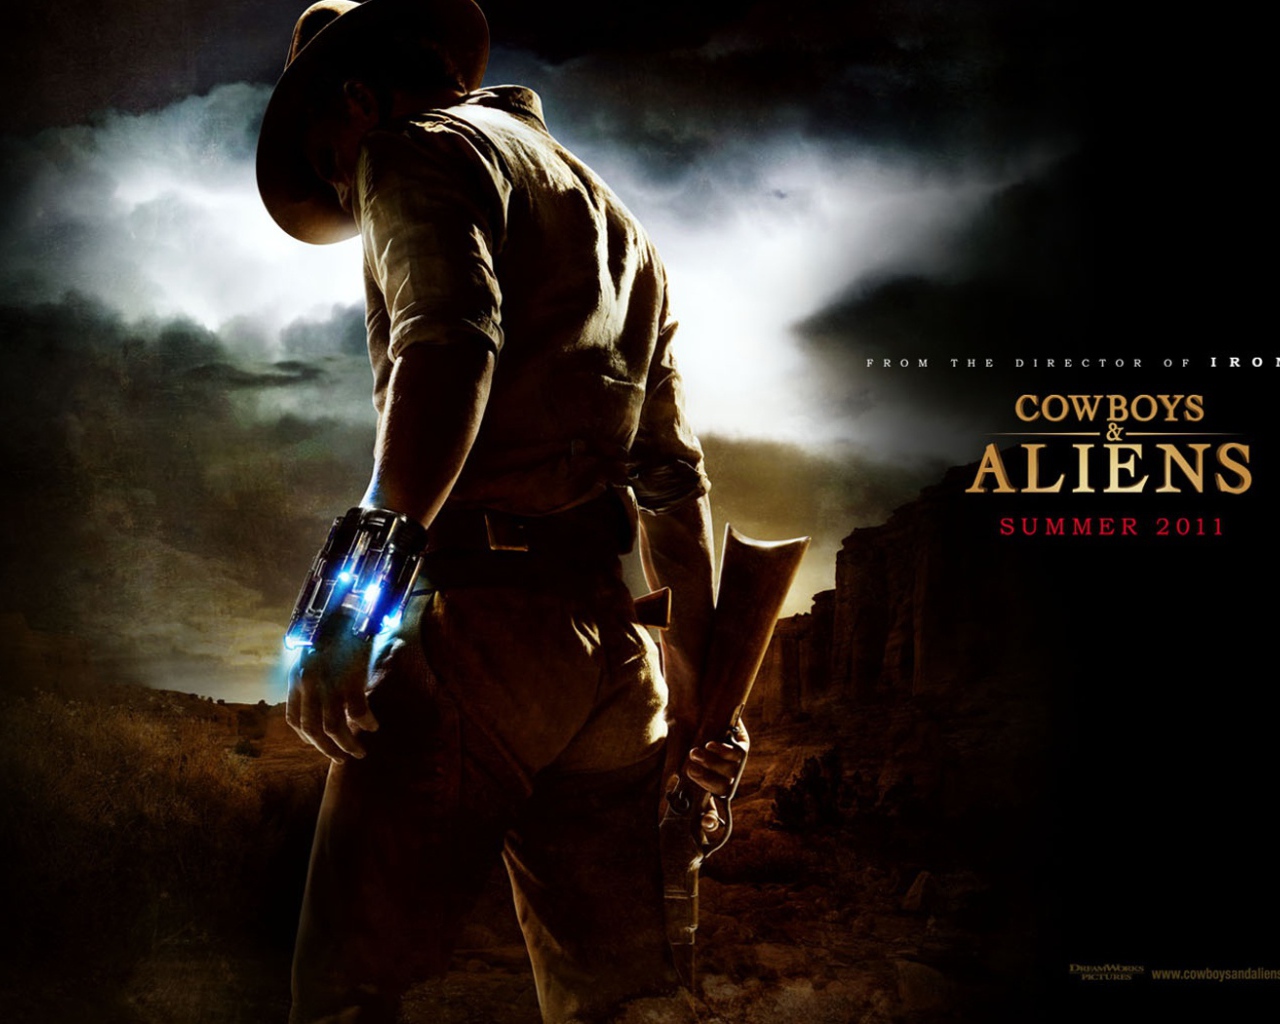 фильм Cowboys and aliens 2011